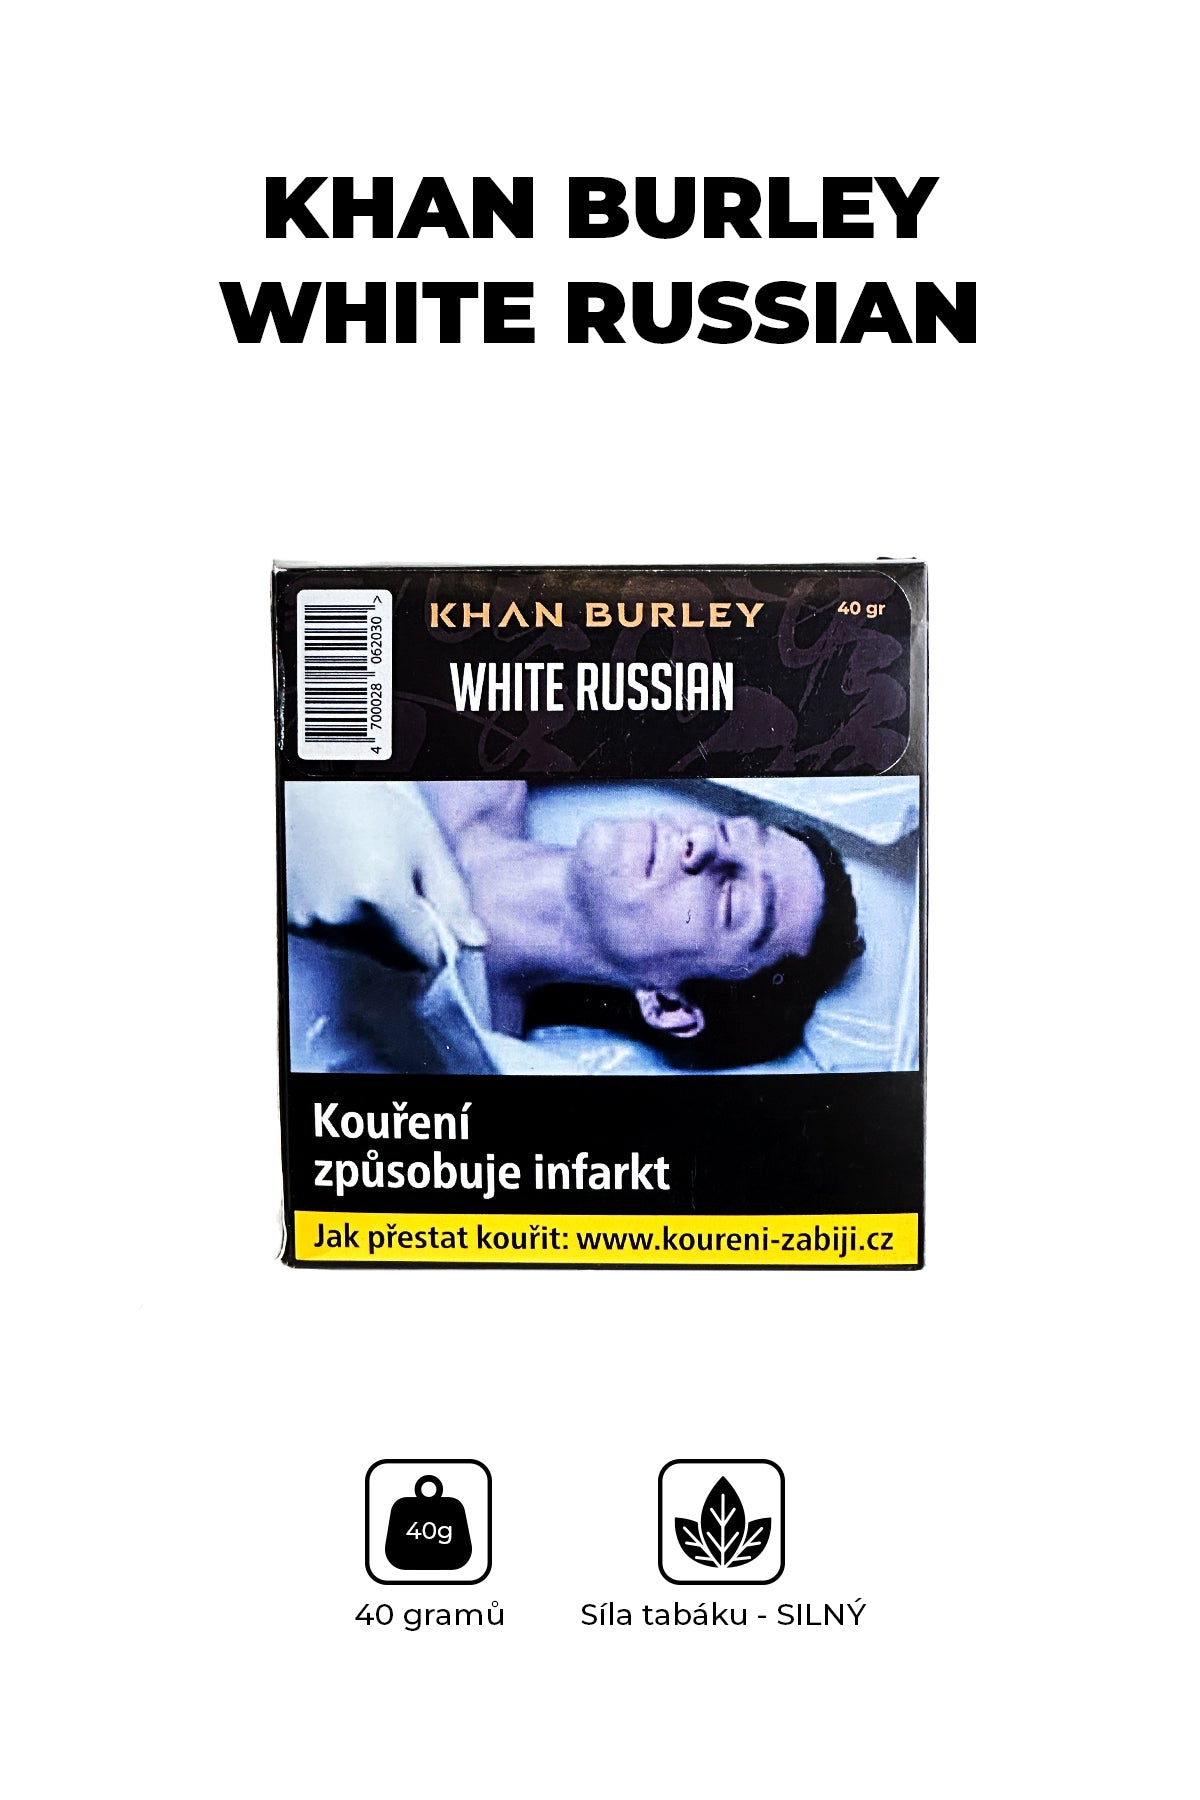 Tabák - Khan Burley 40g - White Russian